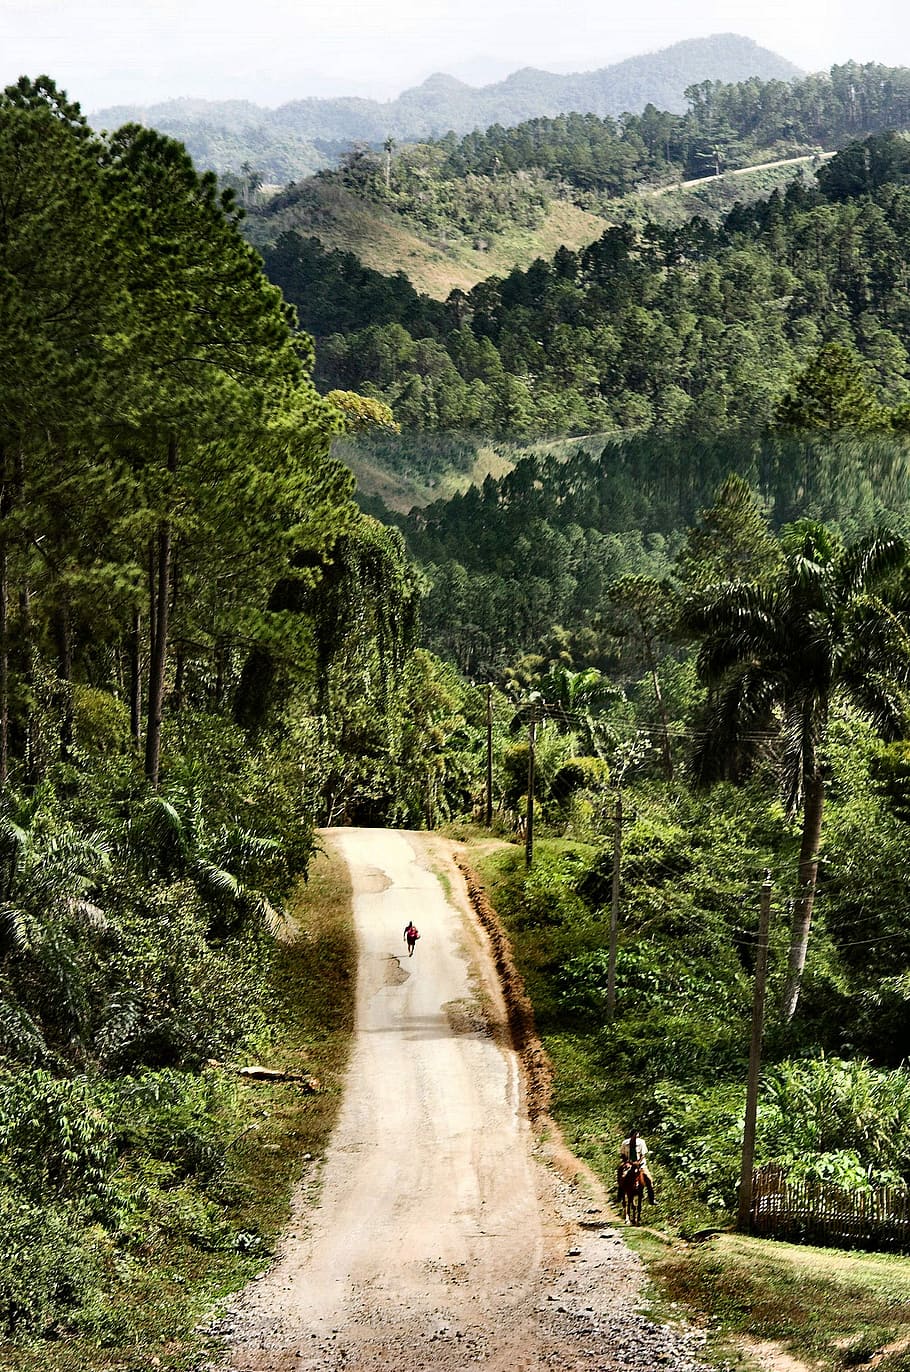 lanskap jalan negara, Jalan negara, lanskap, Kuba, negara, foto, domain publik, jalan, pohon, alam